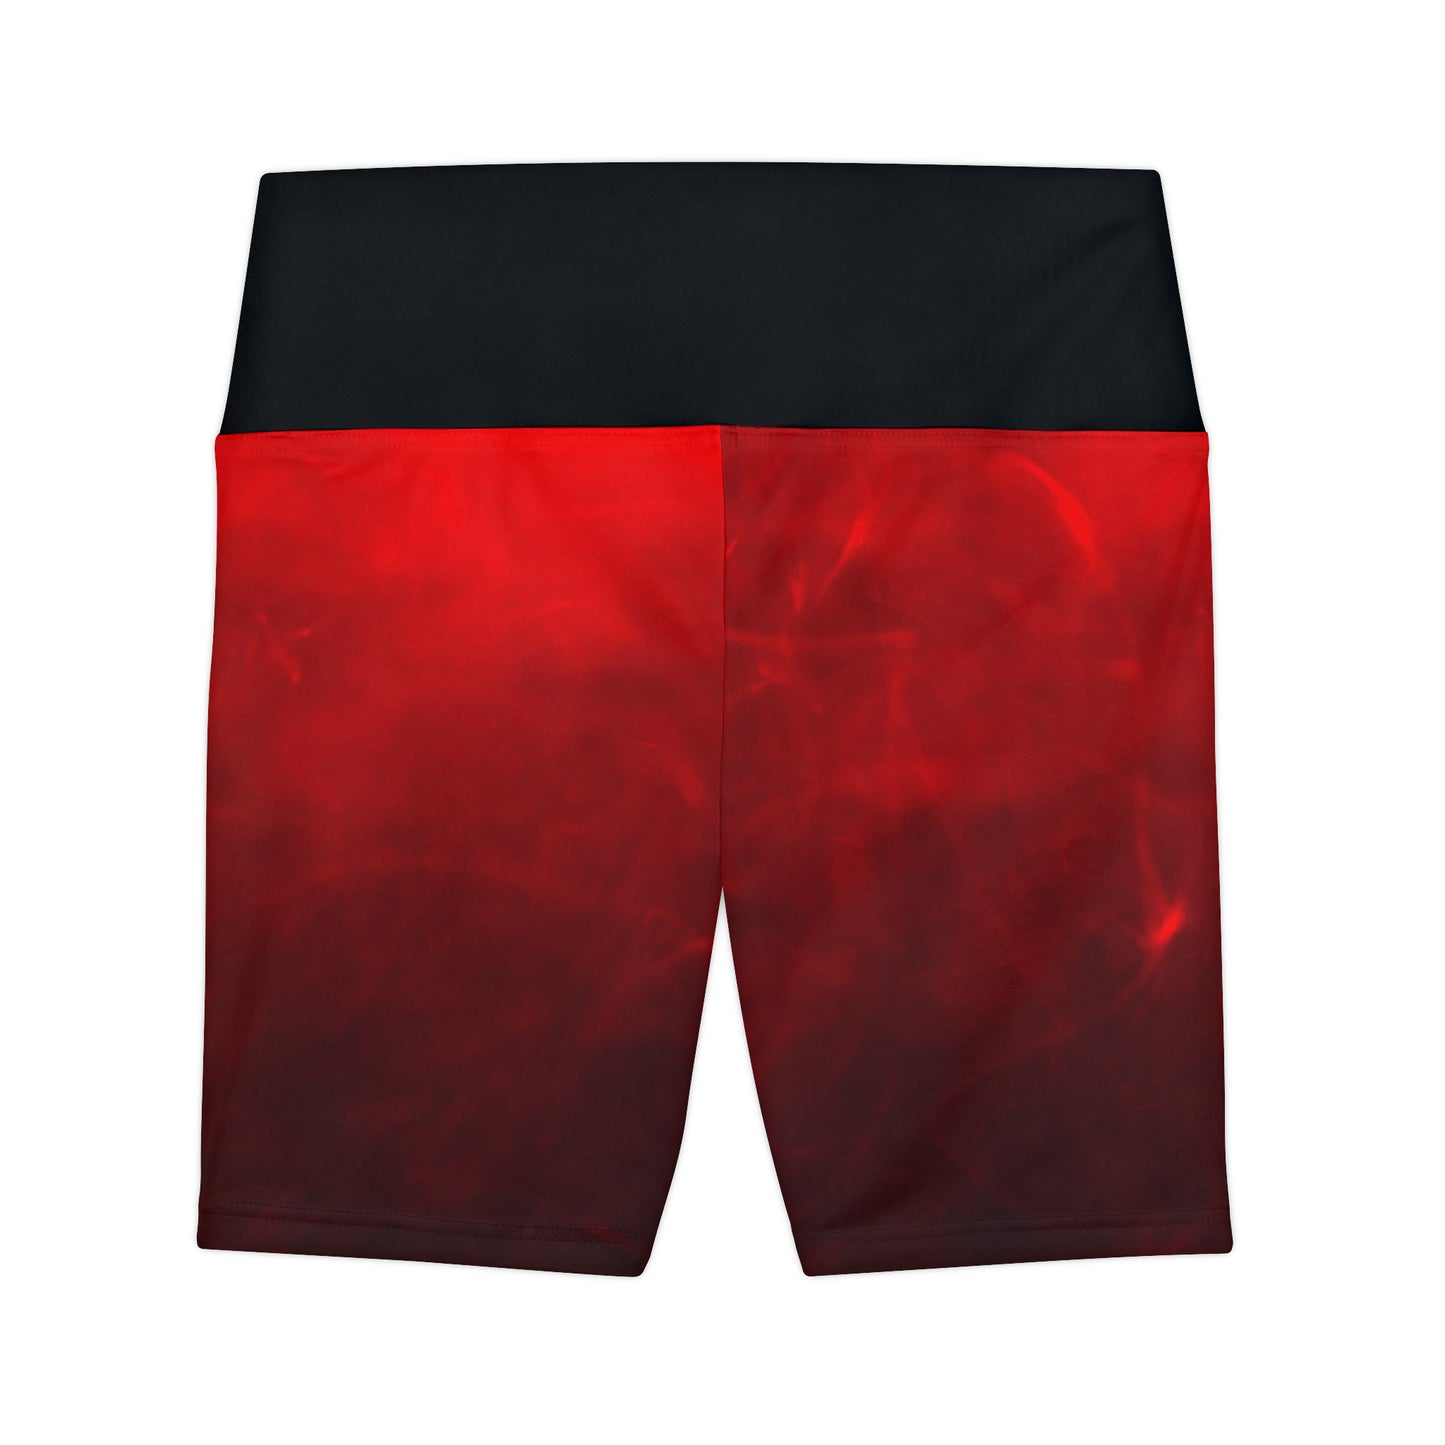 Smokin' Red FlexDry Shorts